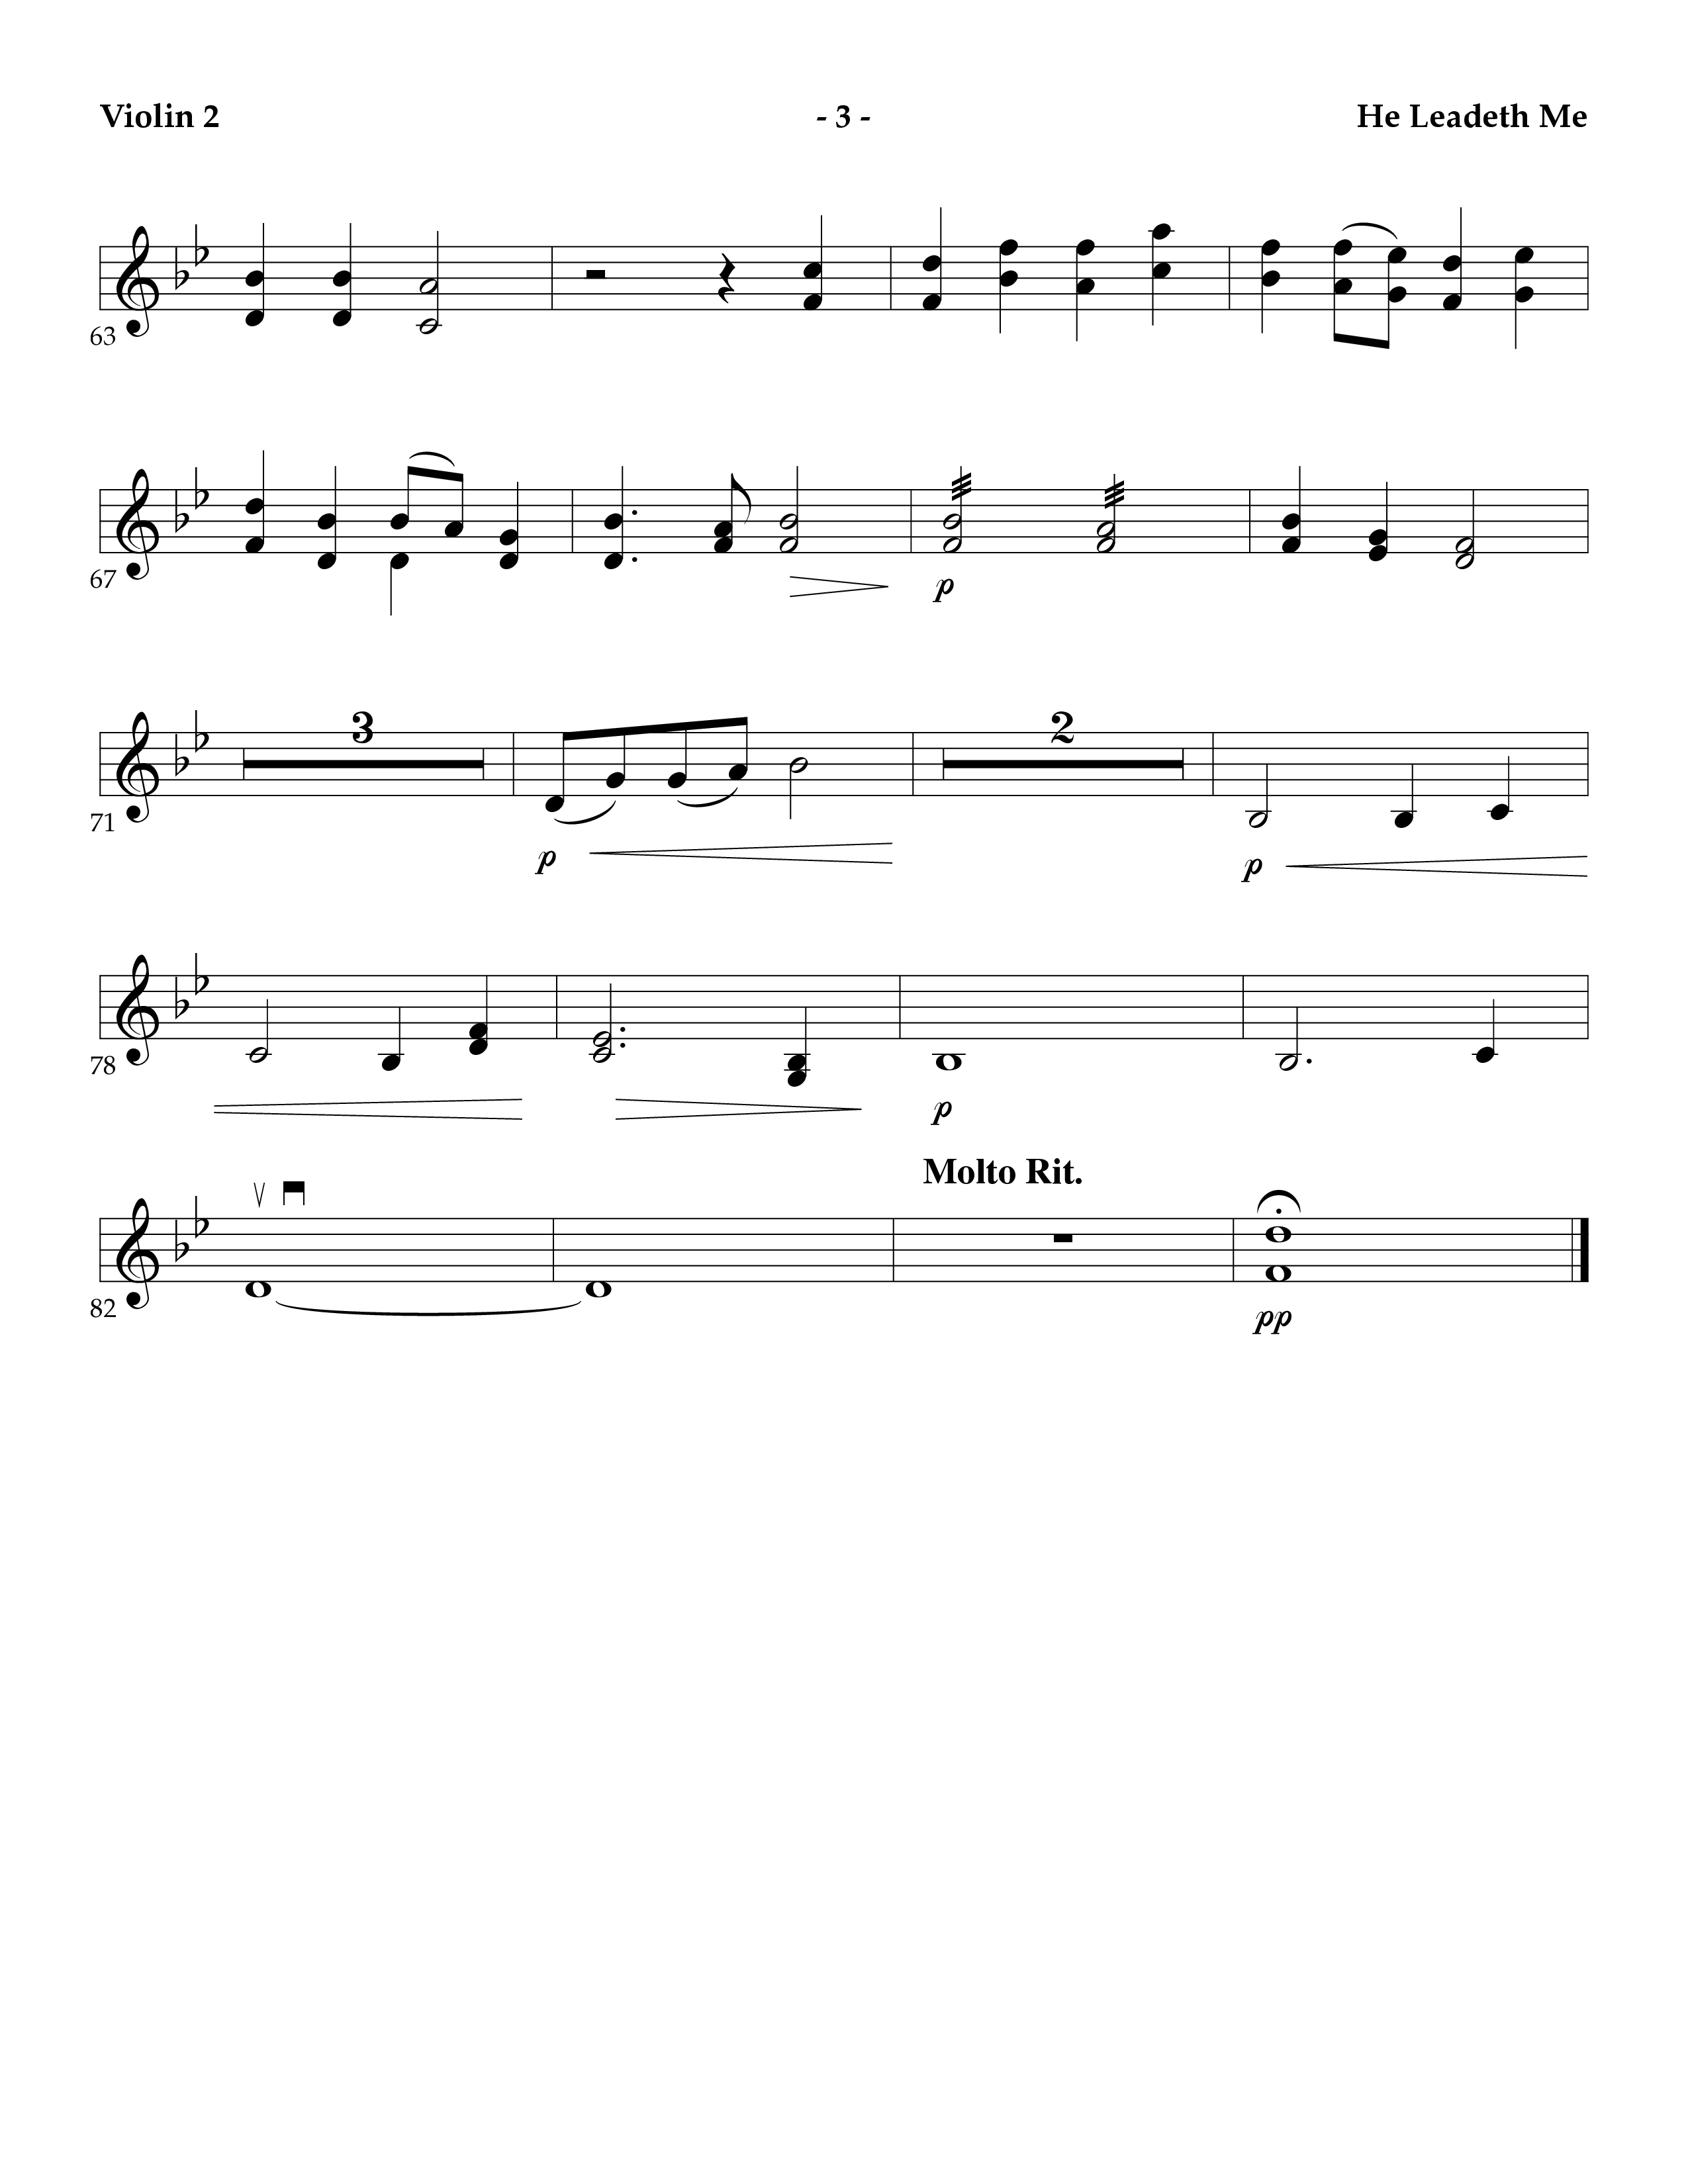 He Leadeth Me (Instrumental) Violin 2 (Lifeway Worship / Arr. Mark Johnson)